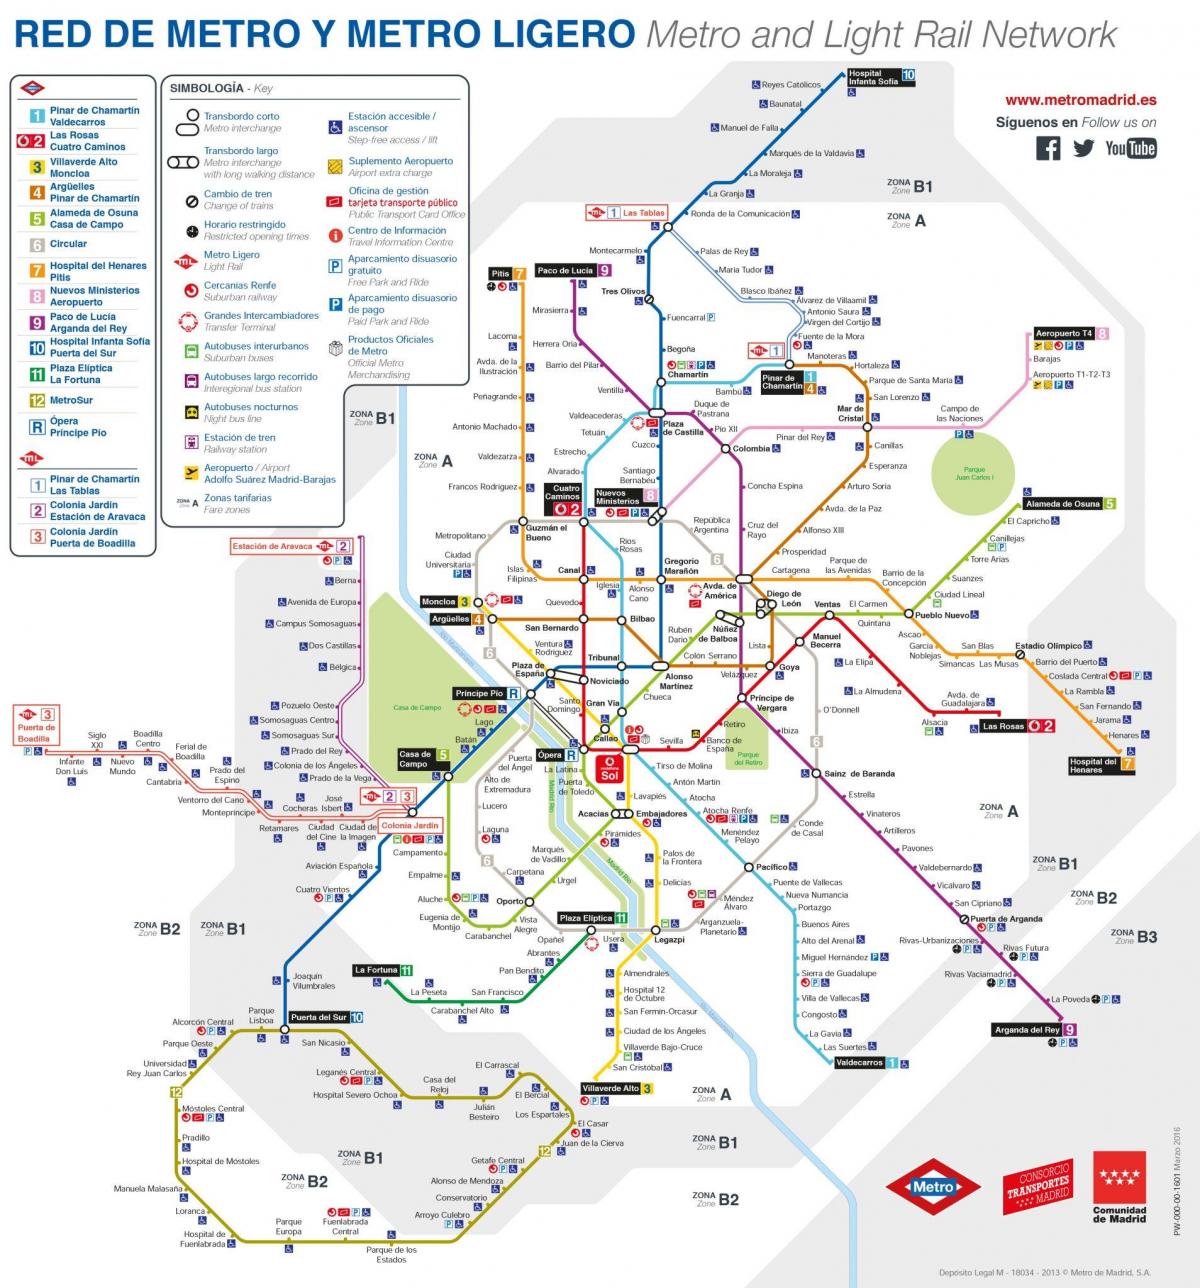 नक्शा मैड्रिड के सार्वजनिक परिवहन